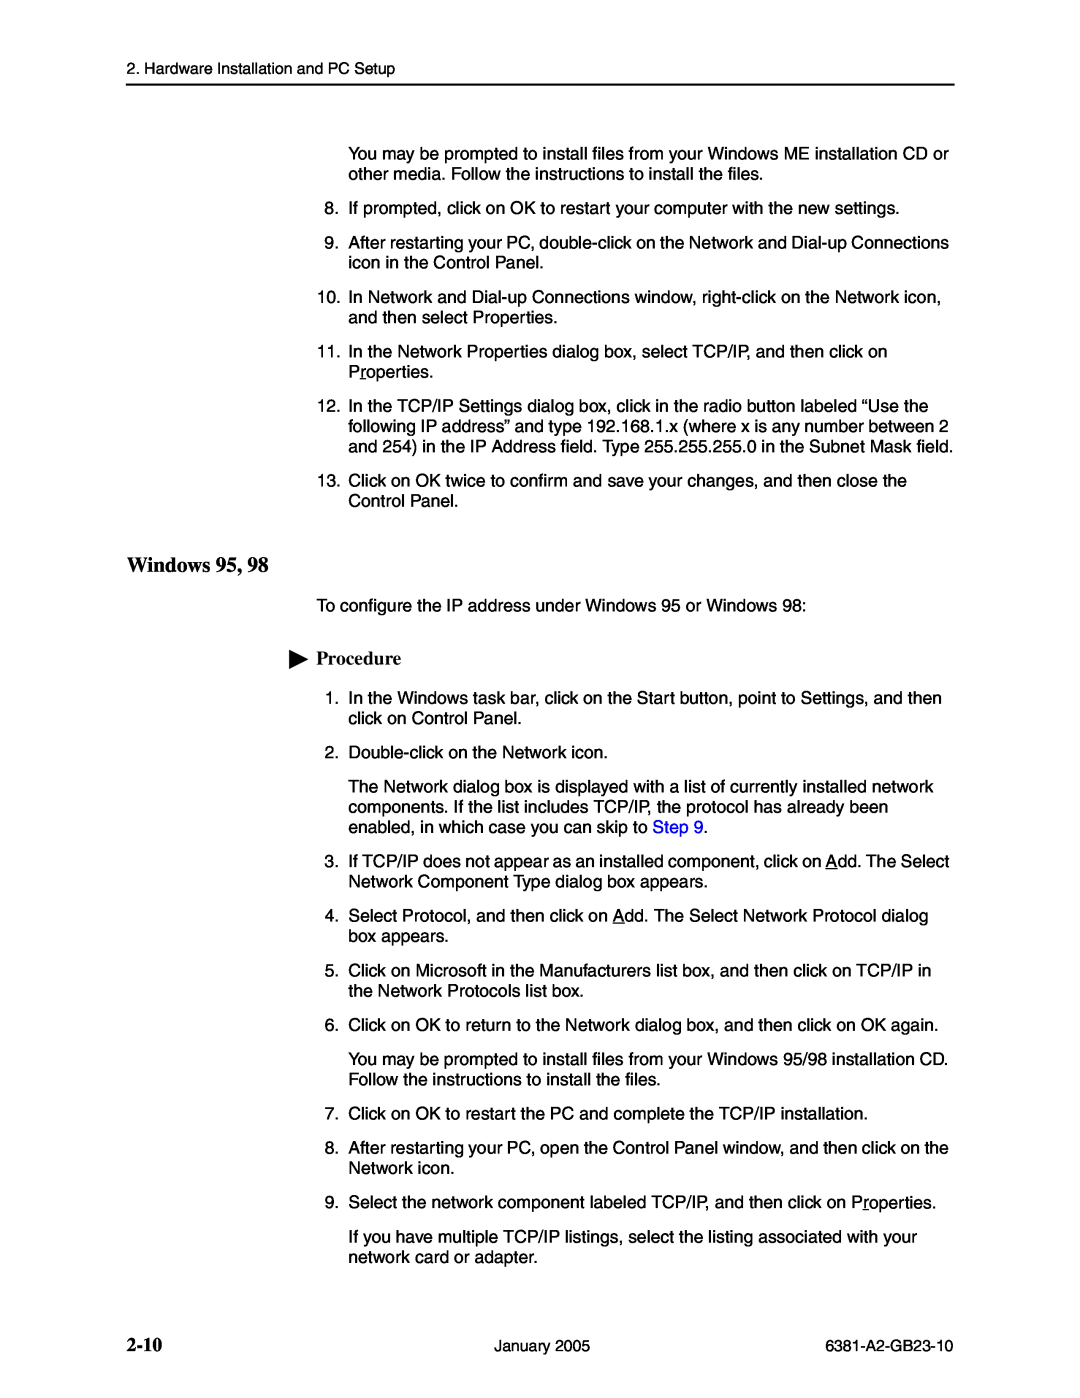 Paradyne 6381-A3 manual Windows 95, 2-10, Procedure 